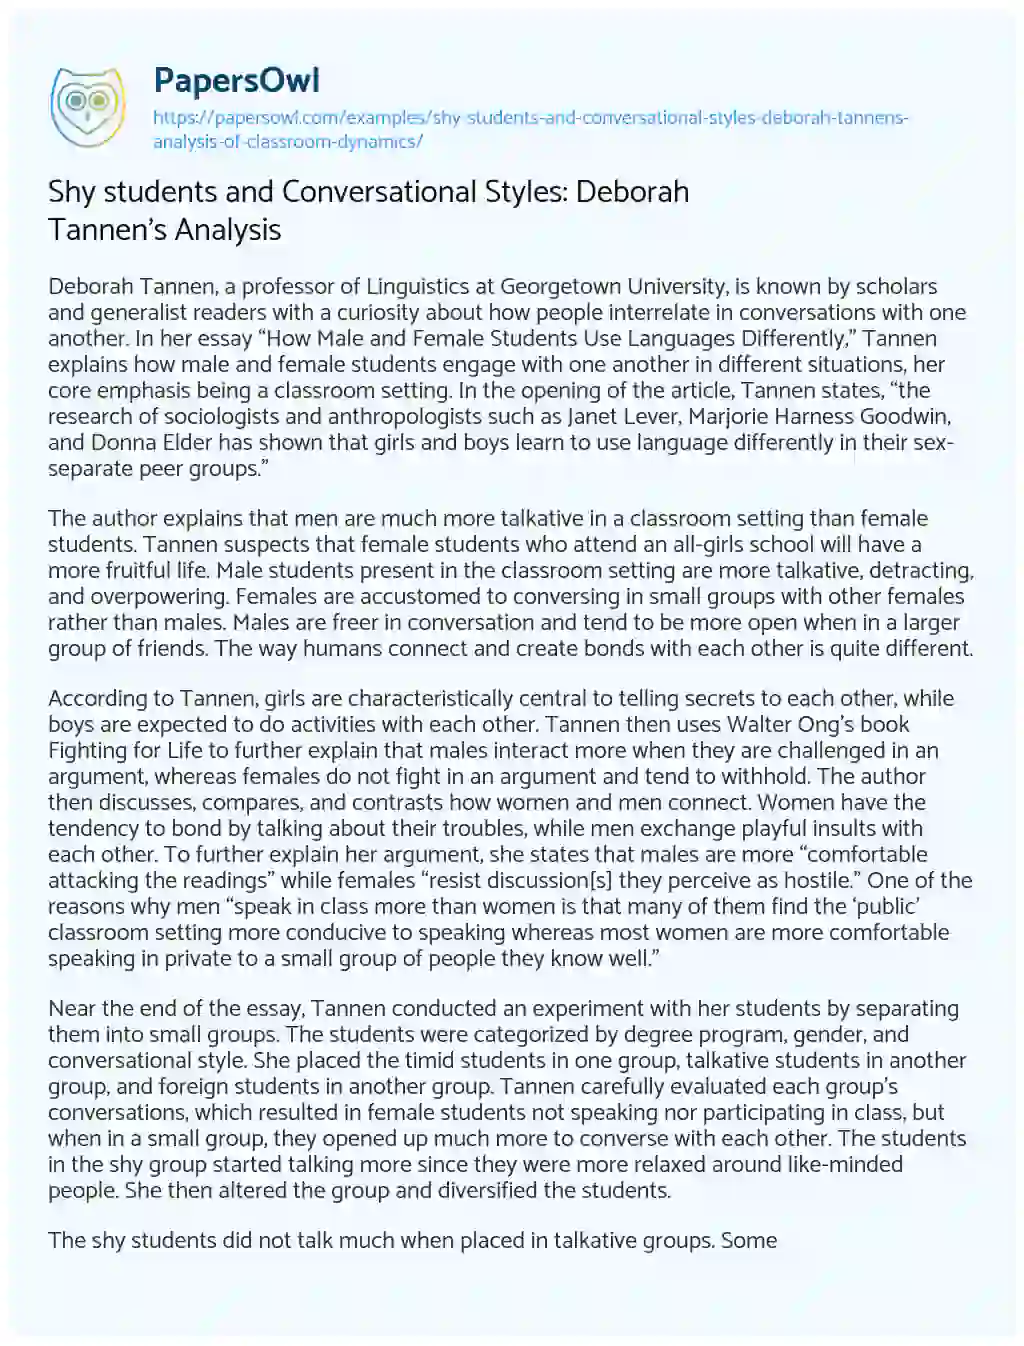 Essay on Shy Students and Conversational Styles: Deborah Tannen’s Analysis